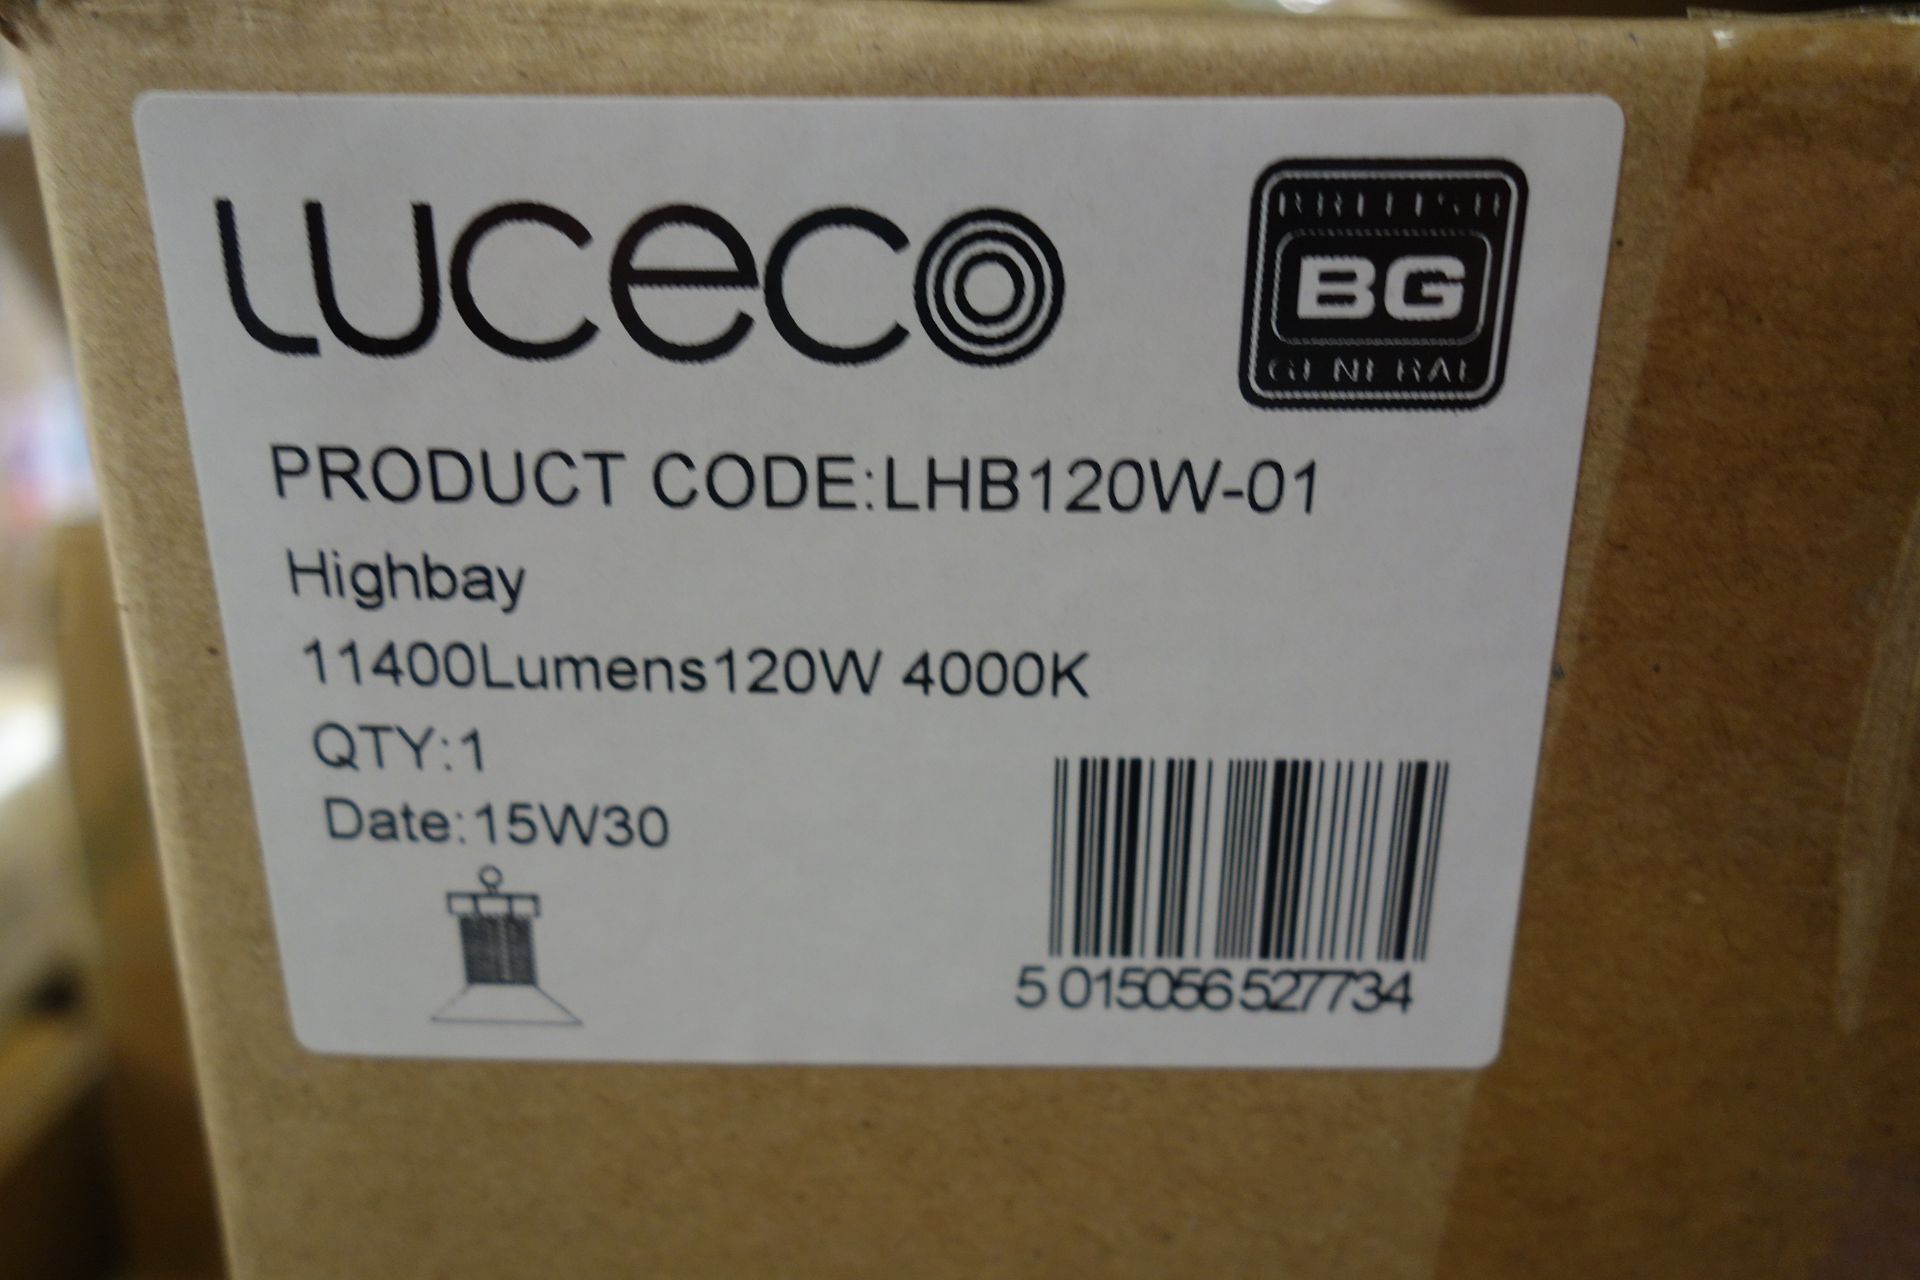 2 x Luceco LHB1201-01 High Bay 120W 11400 Lumens 4000K C/W Beam Reflector. Black Finish